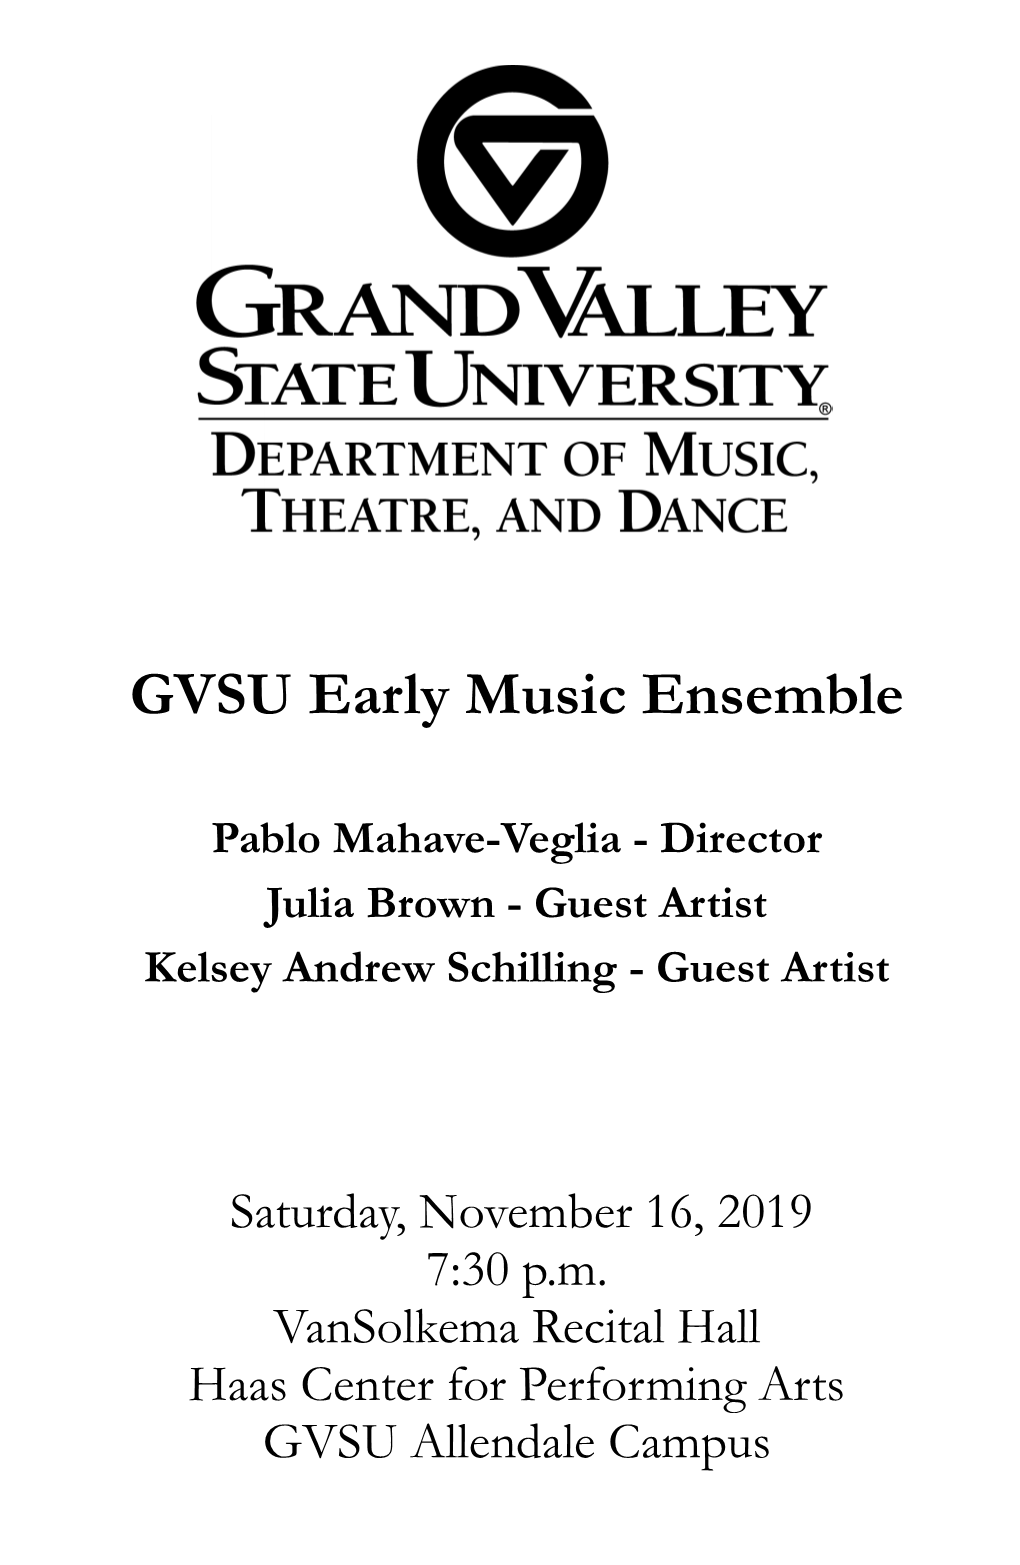 GVSU Early Music Ensemble Sunday, November 24, 2019 - 2:00 P.M